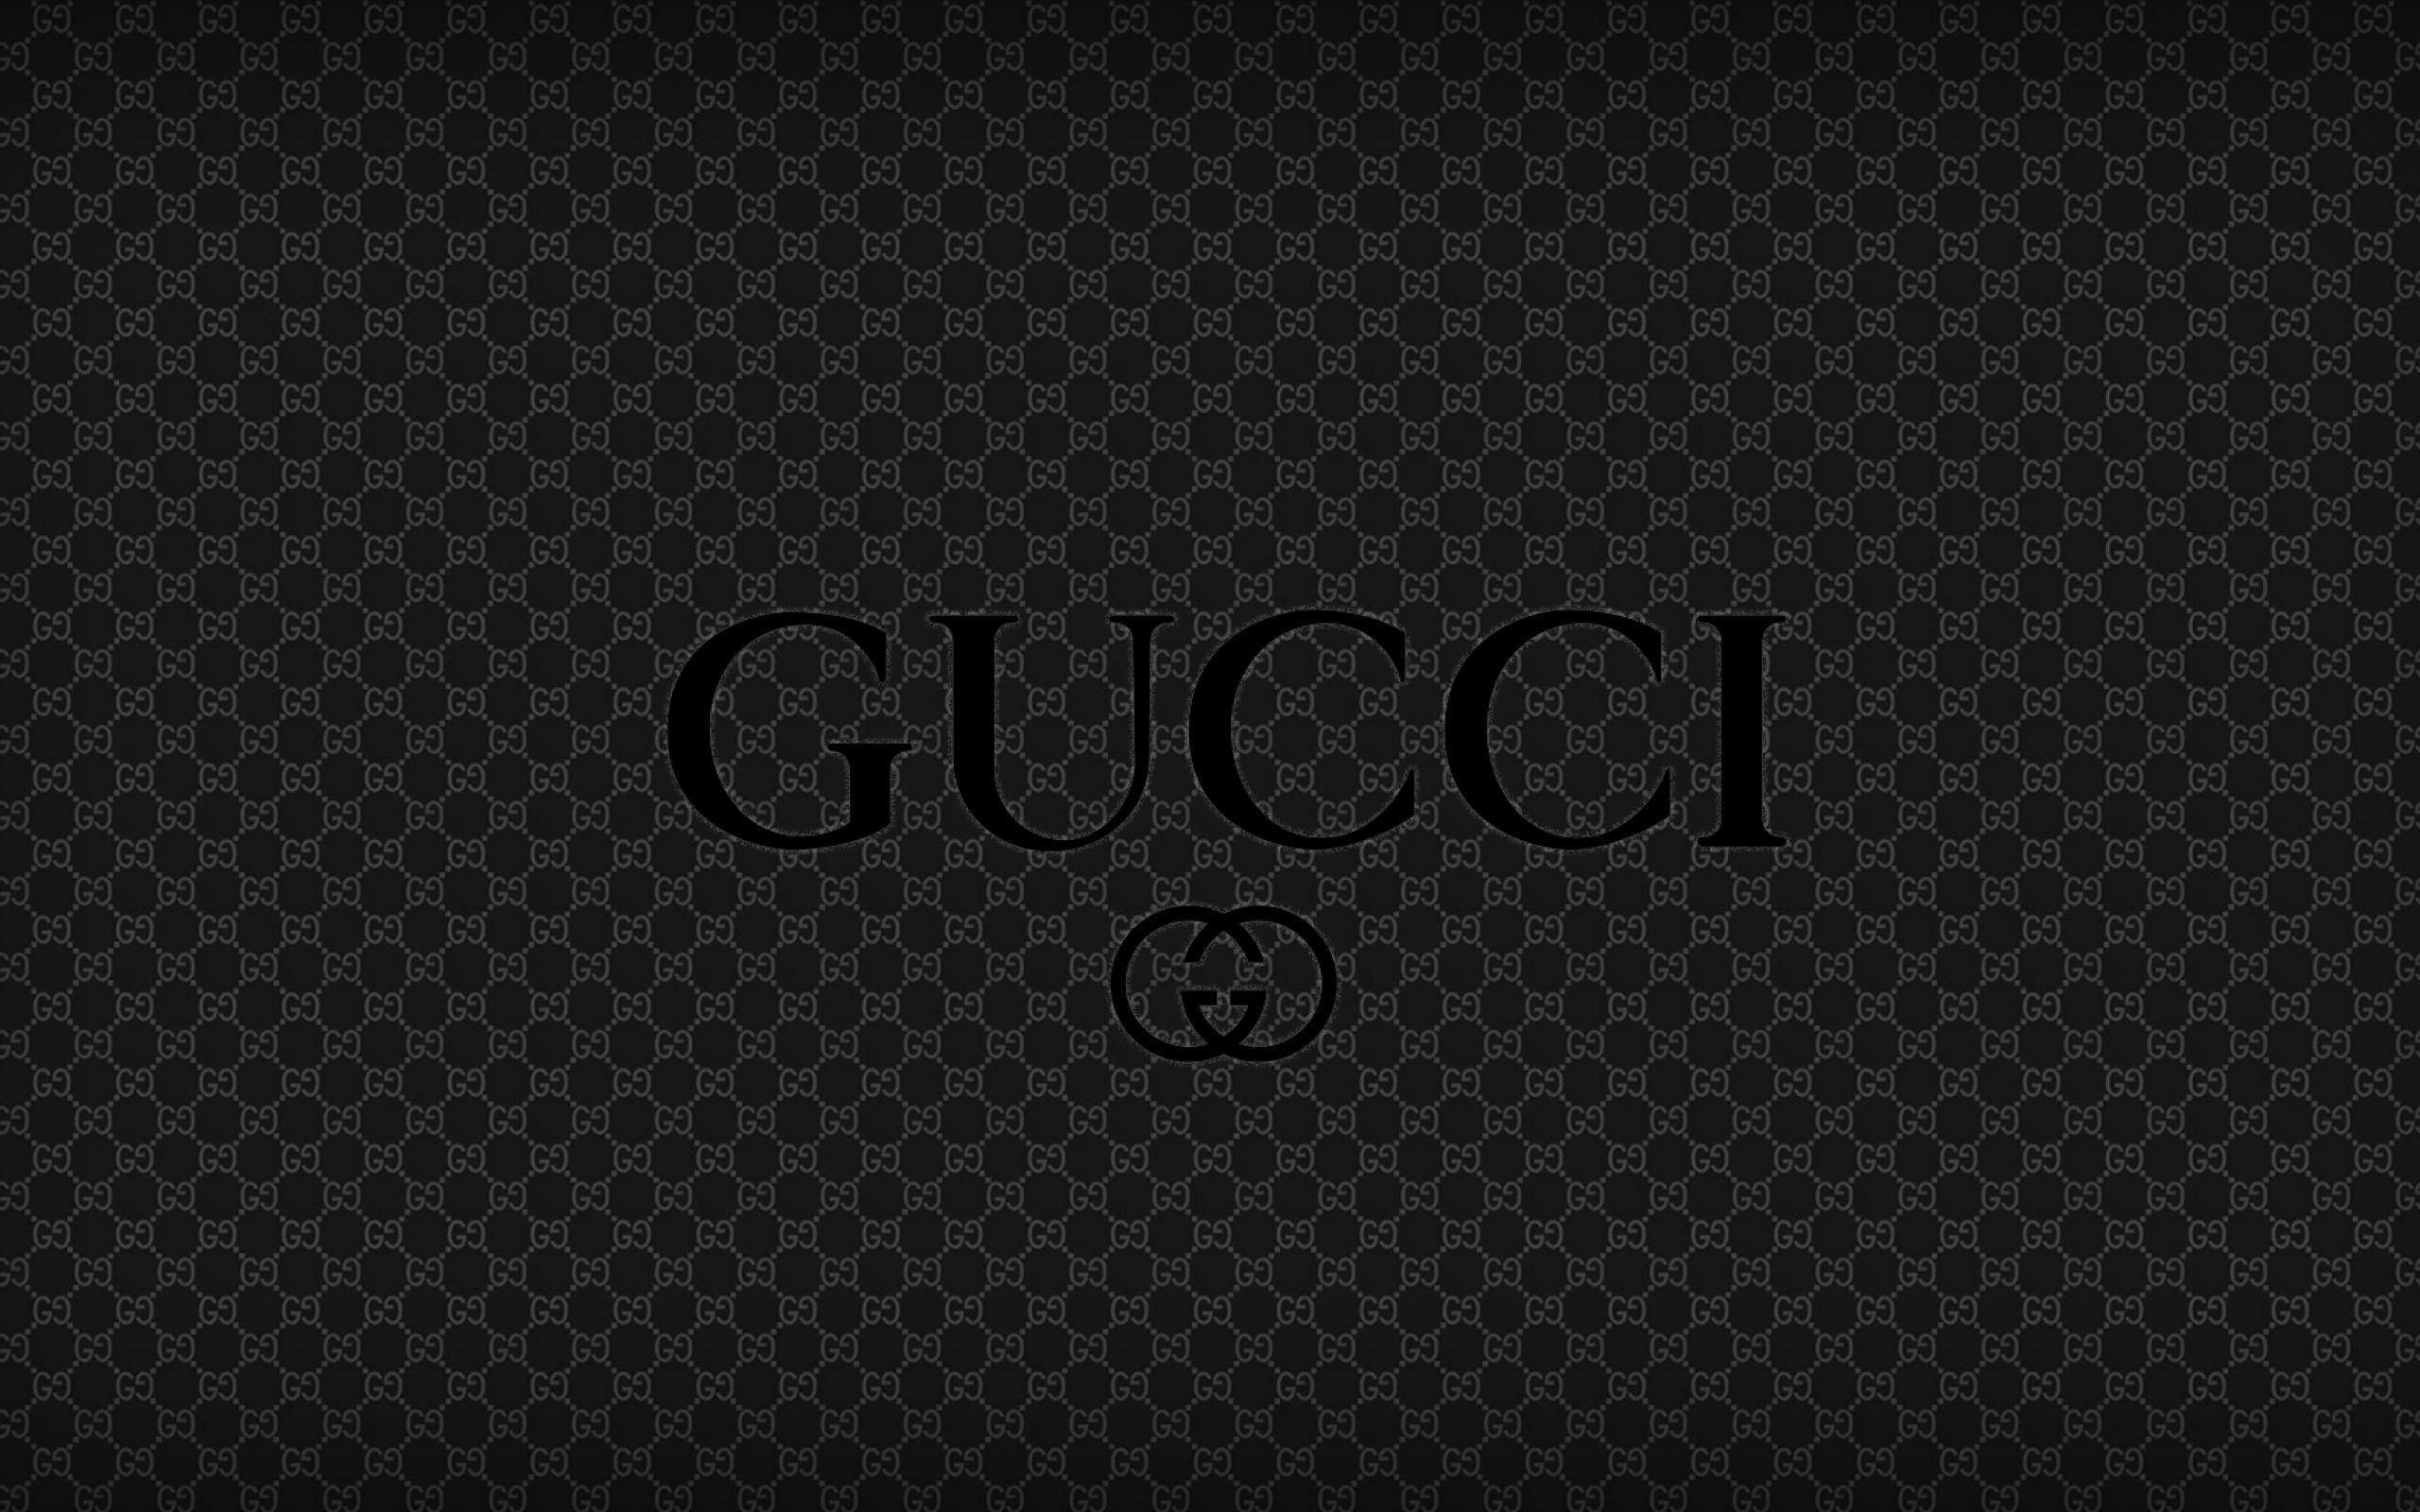 Luis Vuitton x Gucci wallpaper